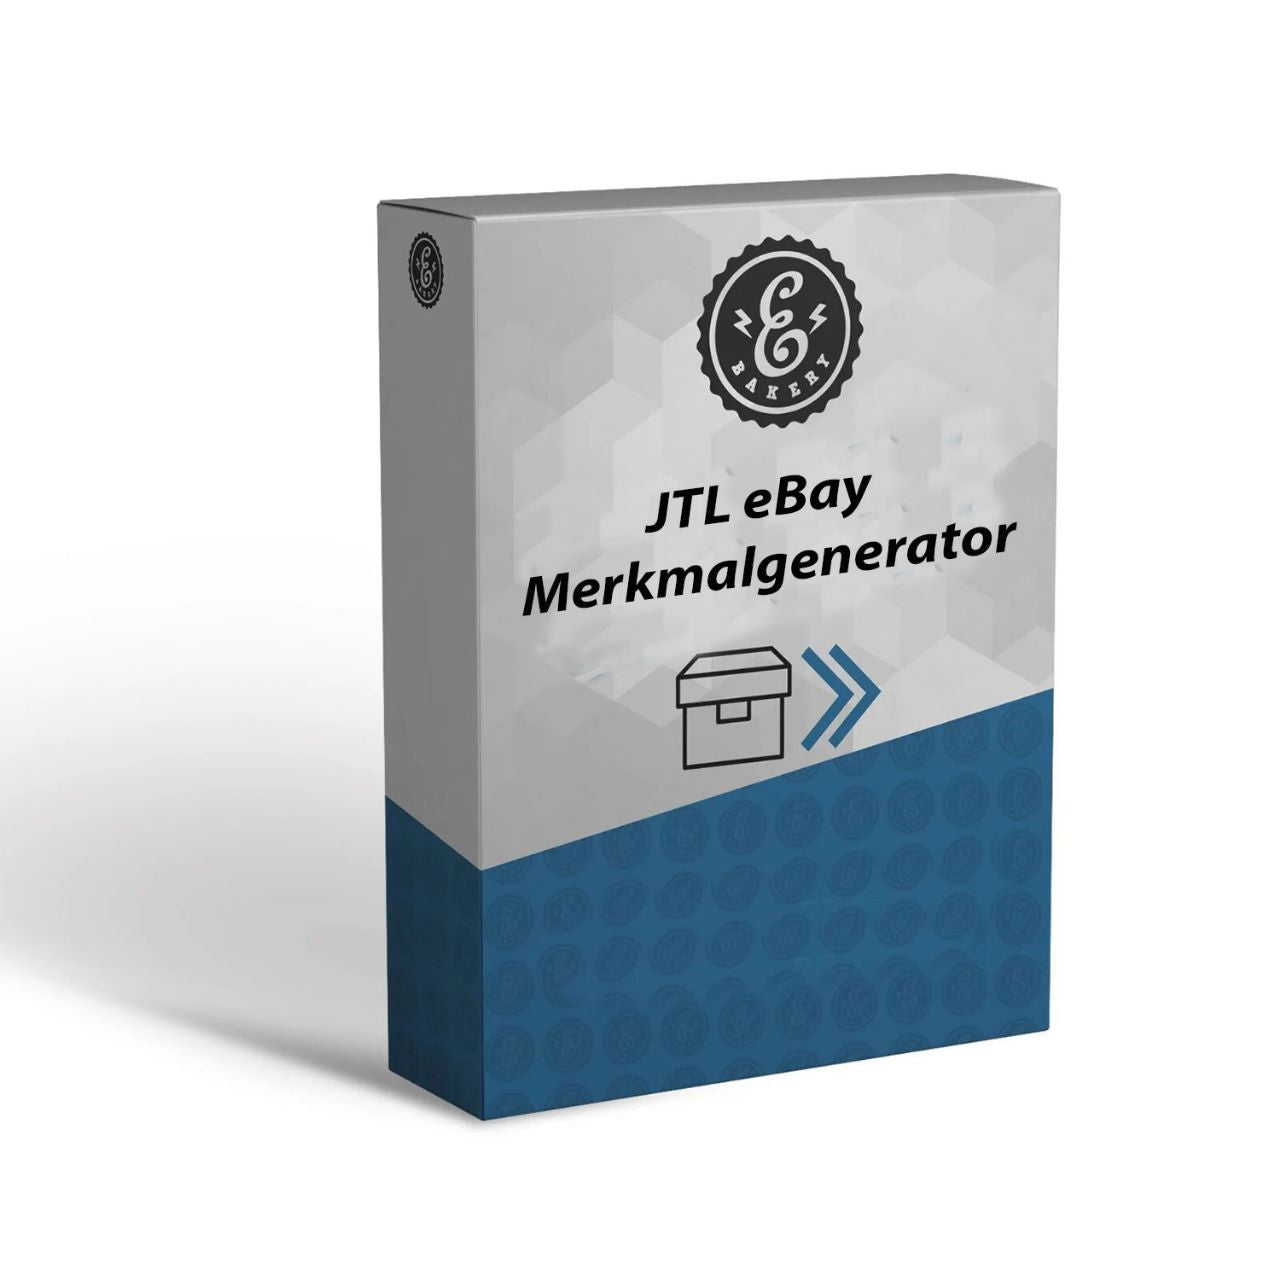 JTL eBay Merkmalgenerator